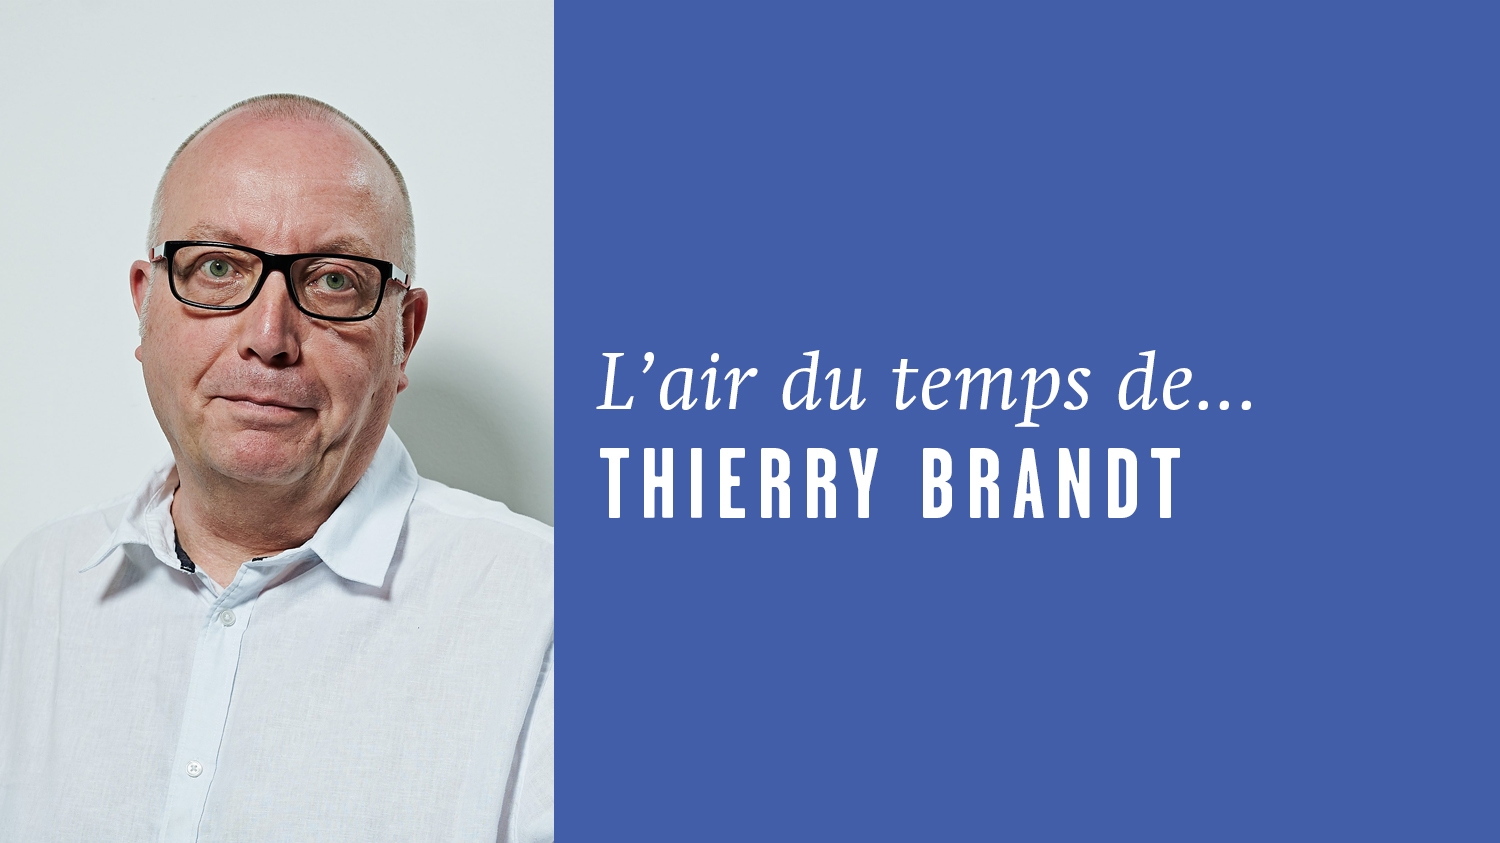 AirDutemps-ThierryBrandt